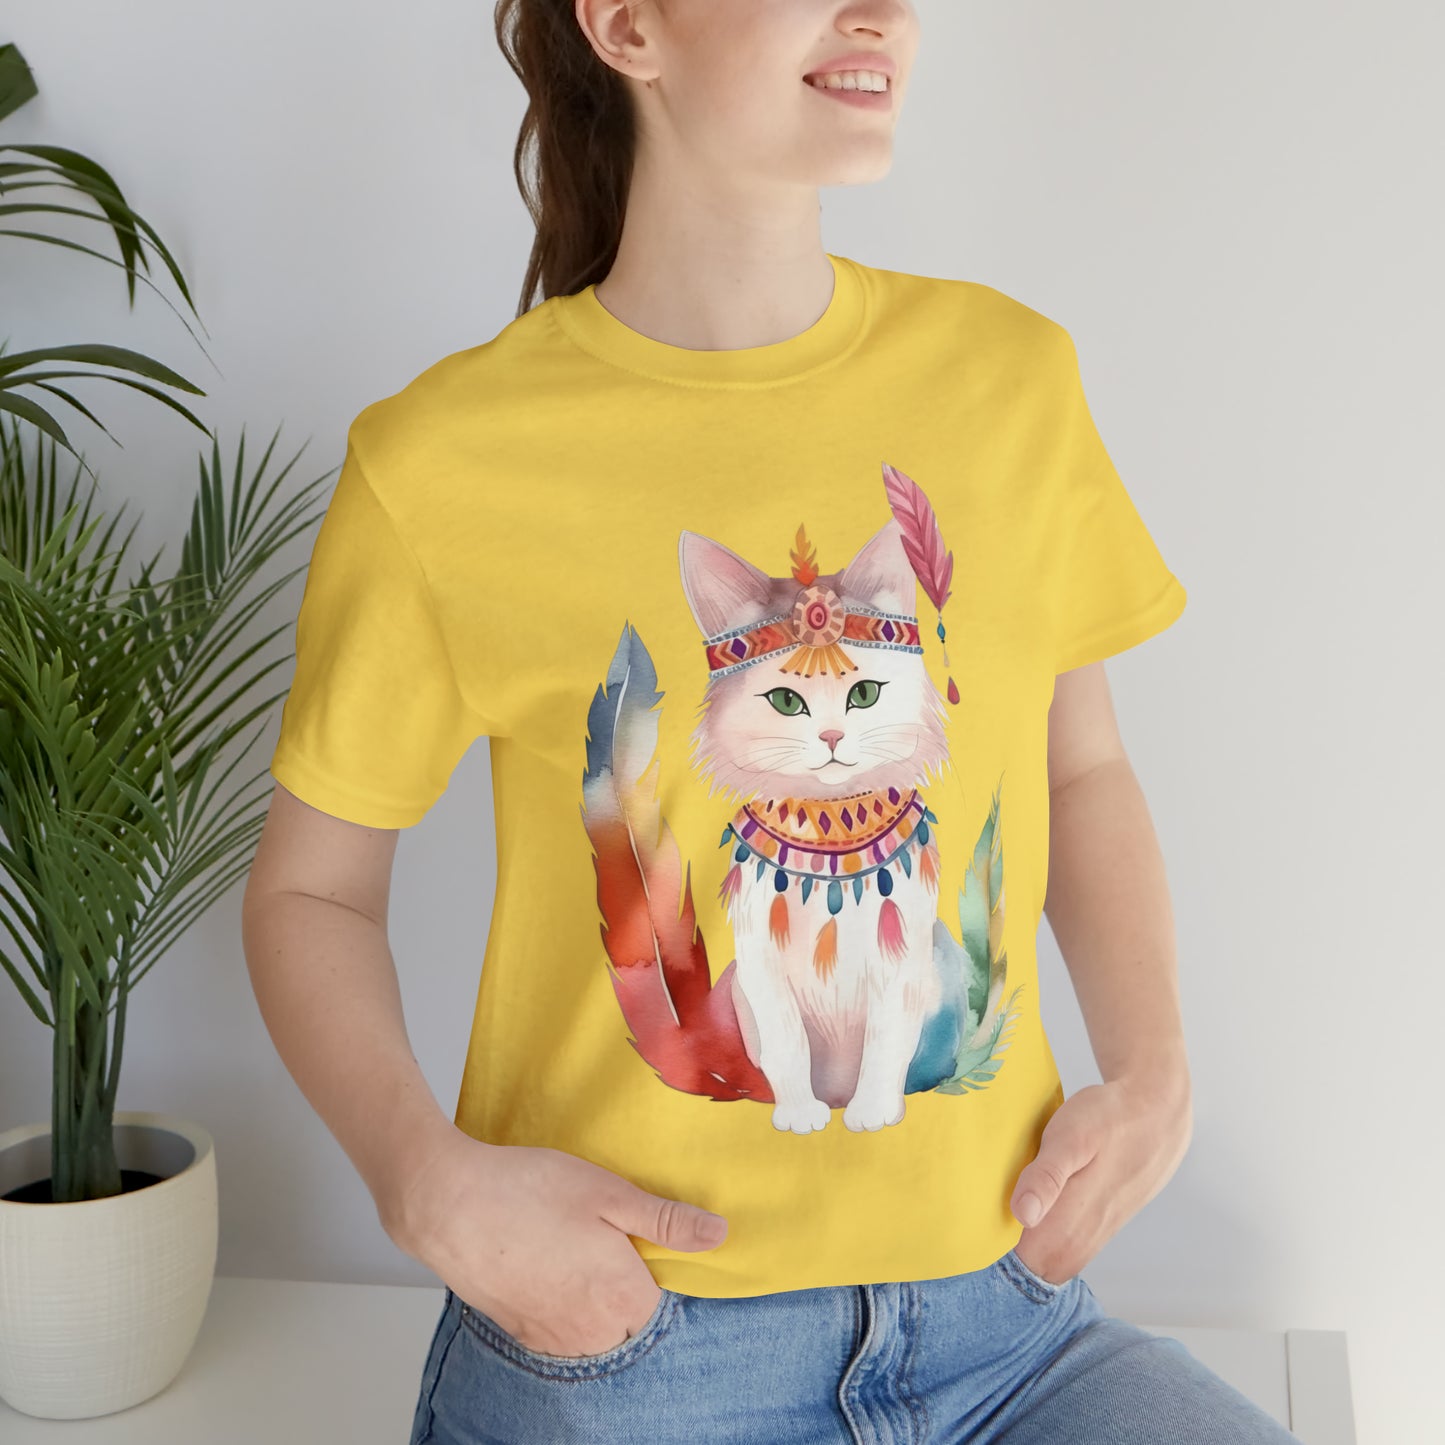 Cat Native Indian American Woman Shirt, cat Indigenous Designed t shirt, Cute cat tee shirt, Native American Art tee, cat lover gift